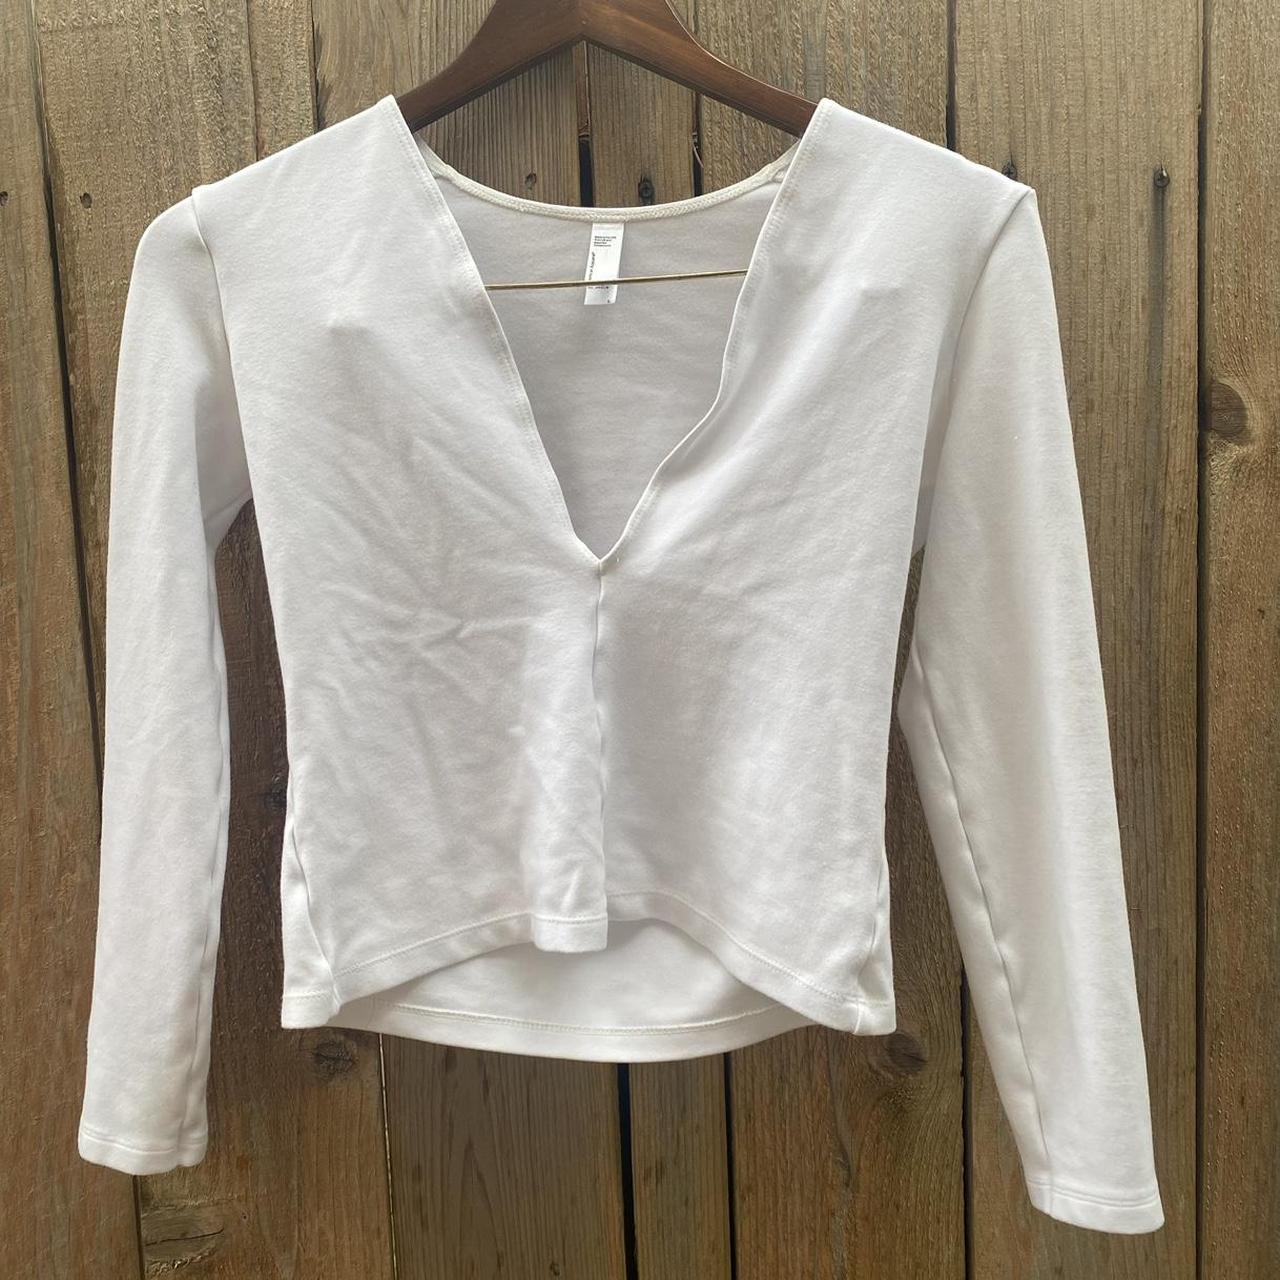 American Apparel Women's White Shirt